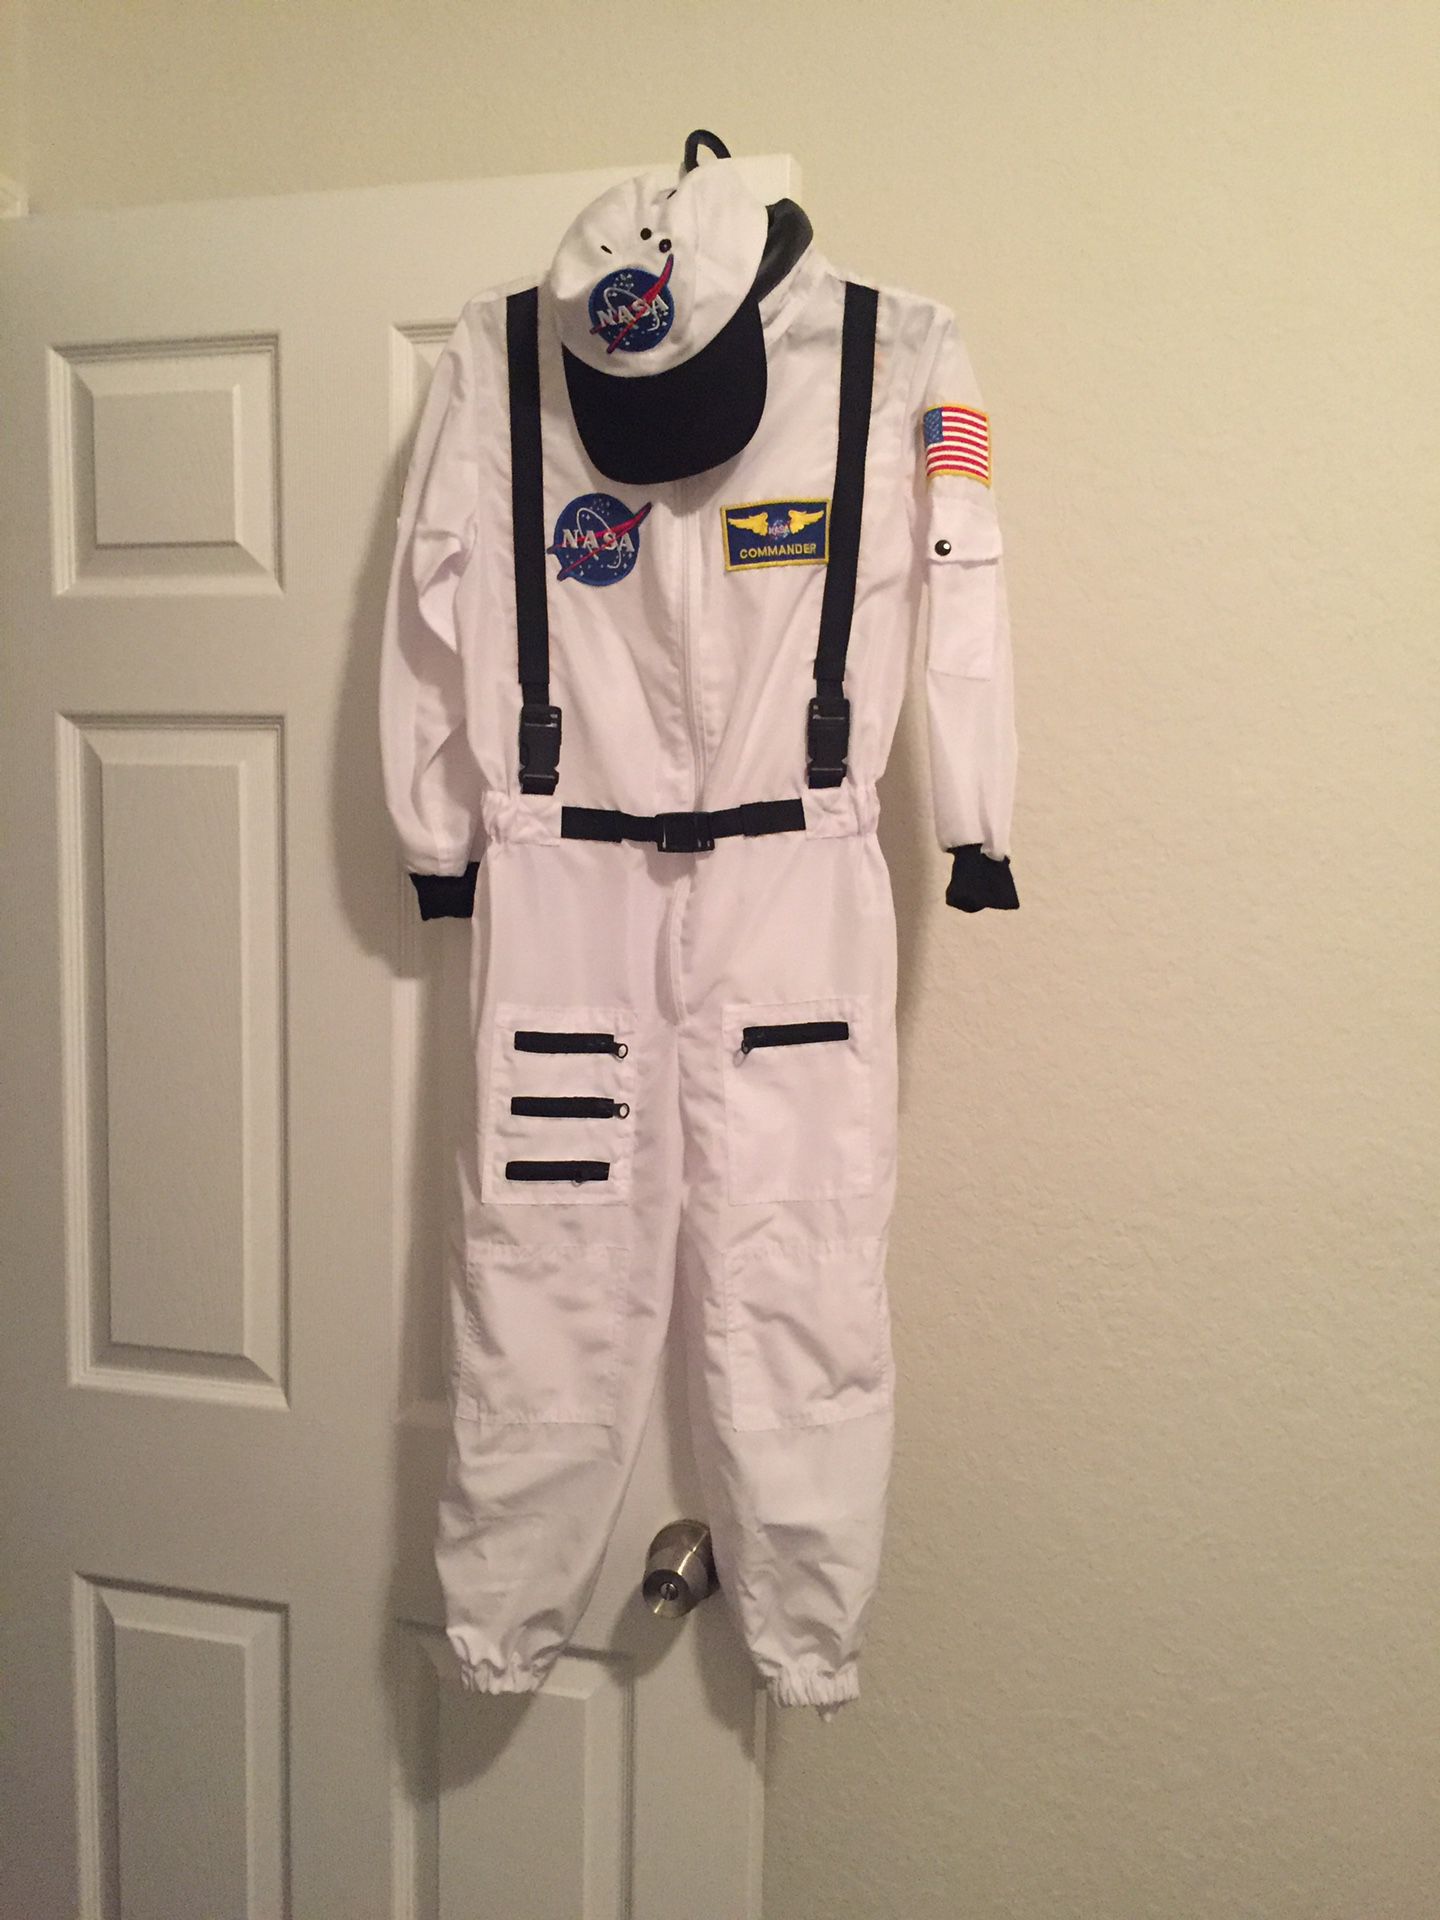 NASA Commander Kids Costume